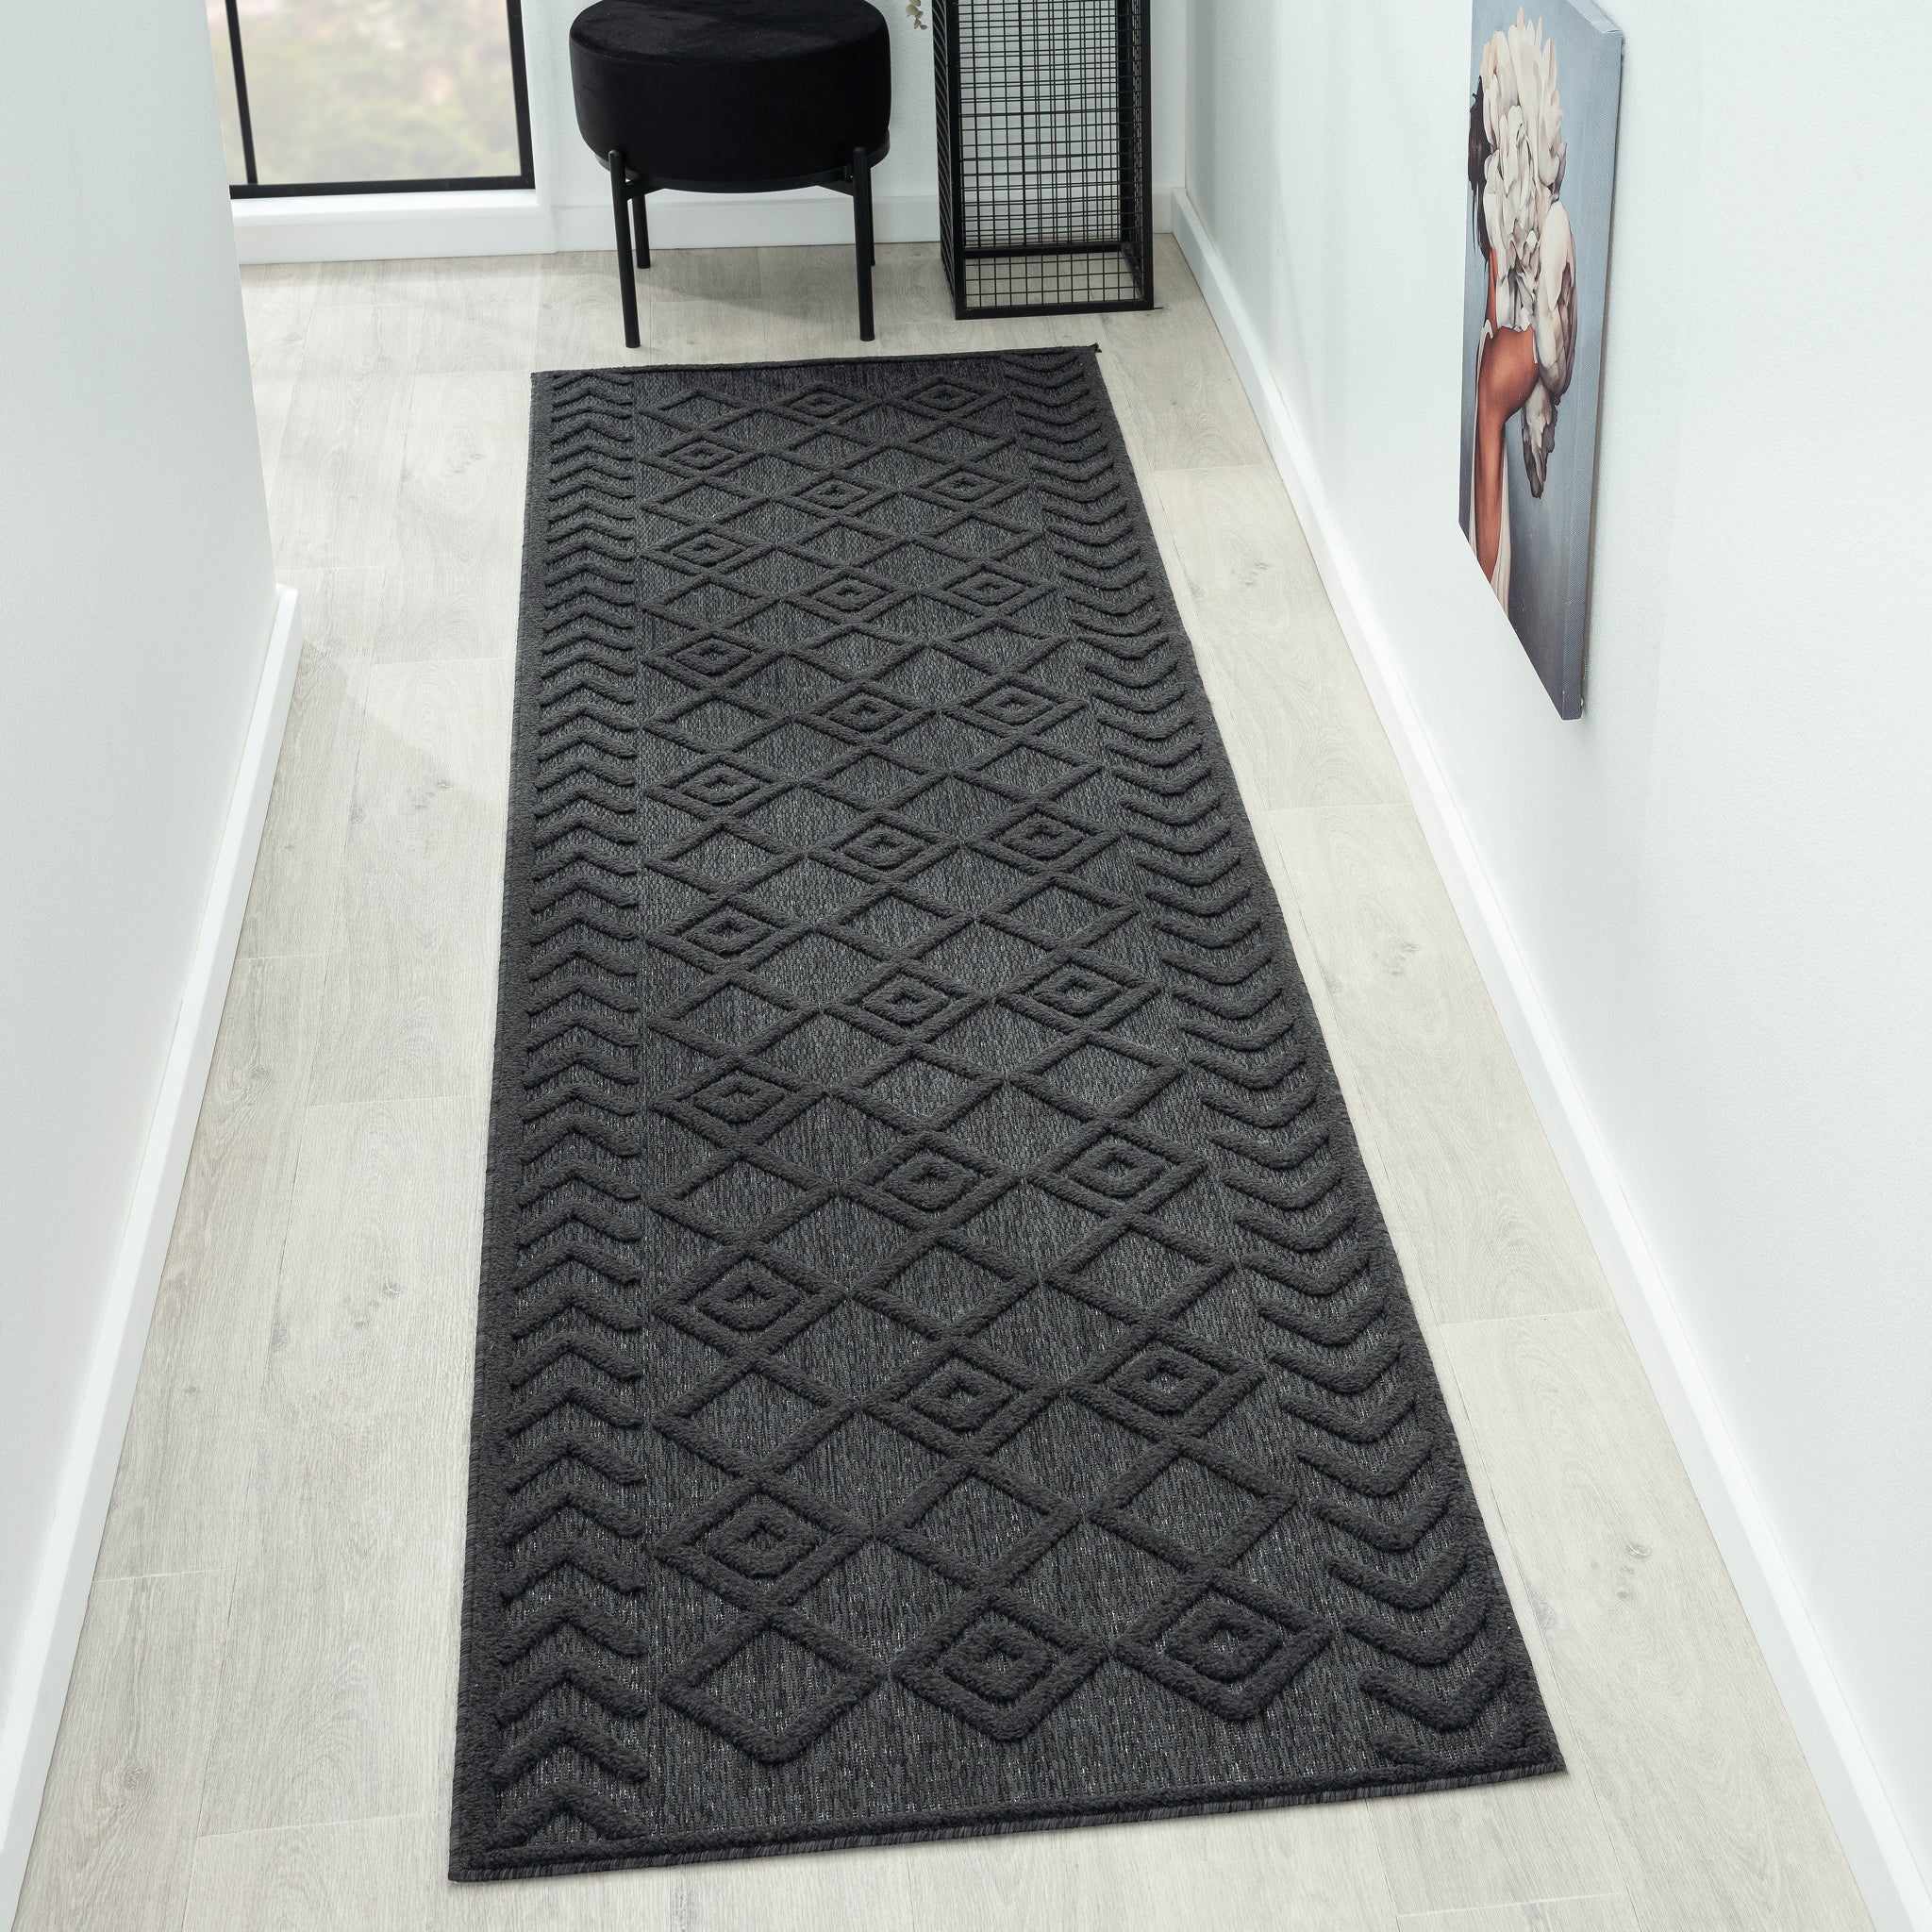 Calmer 416 Charcoal geometric patterns Hallway Runner Saray Rugs